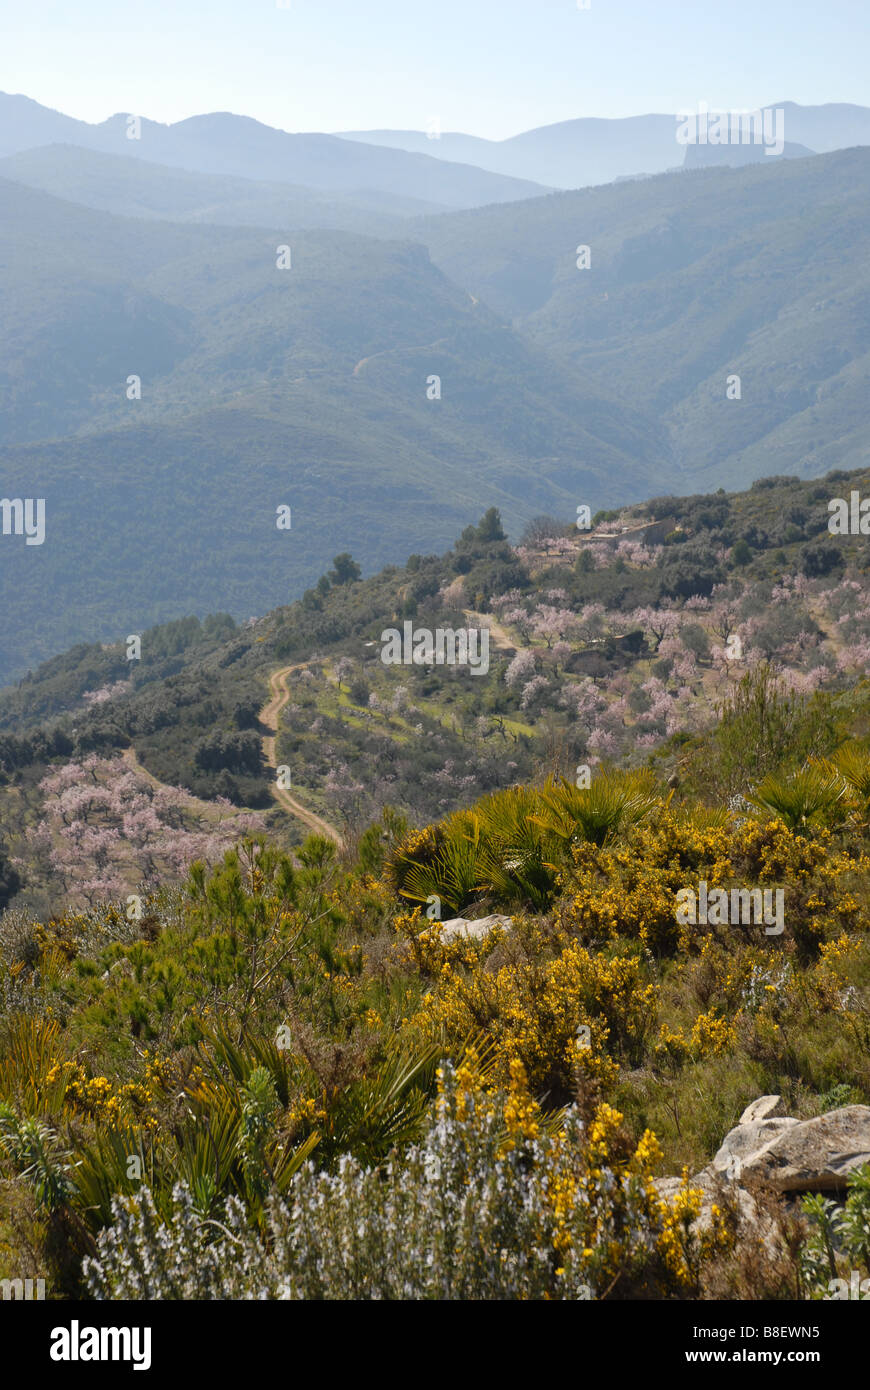 rosemary, gorse, almond orchards & mountains, near Benimaurell, Vall de Laguar, Alicante province, Comunidad Valenciana, Spain Stock Photo